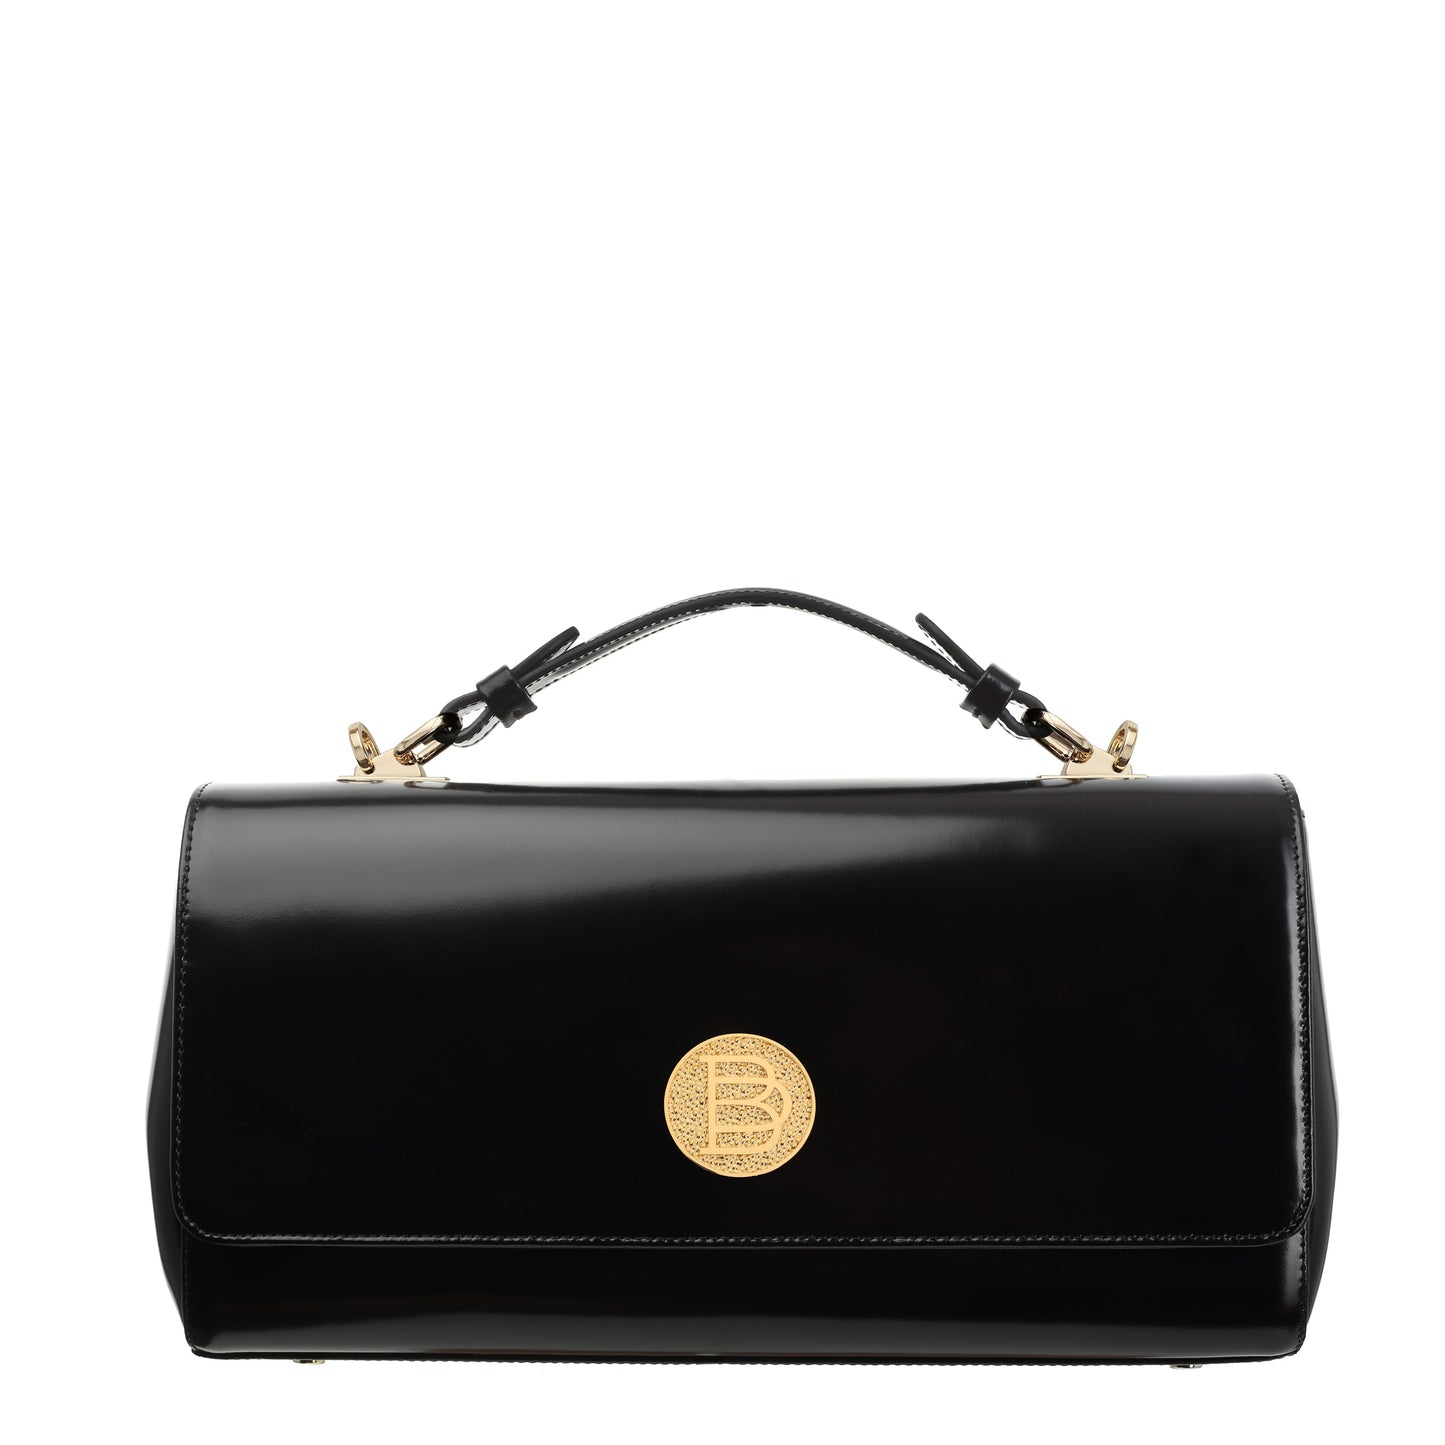 UNITY SPECCHIO BLACK women's leather handbag